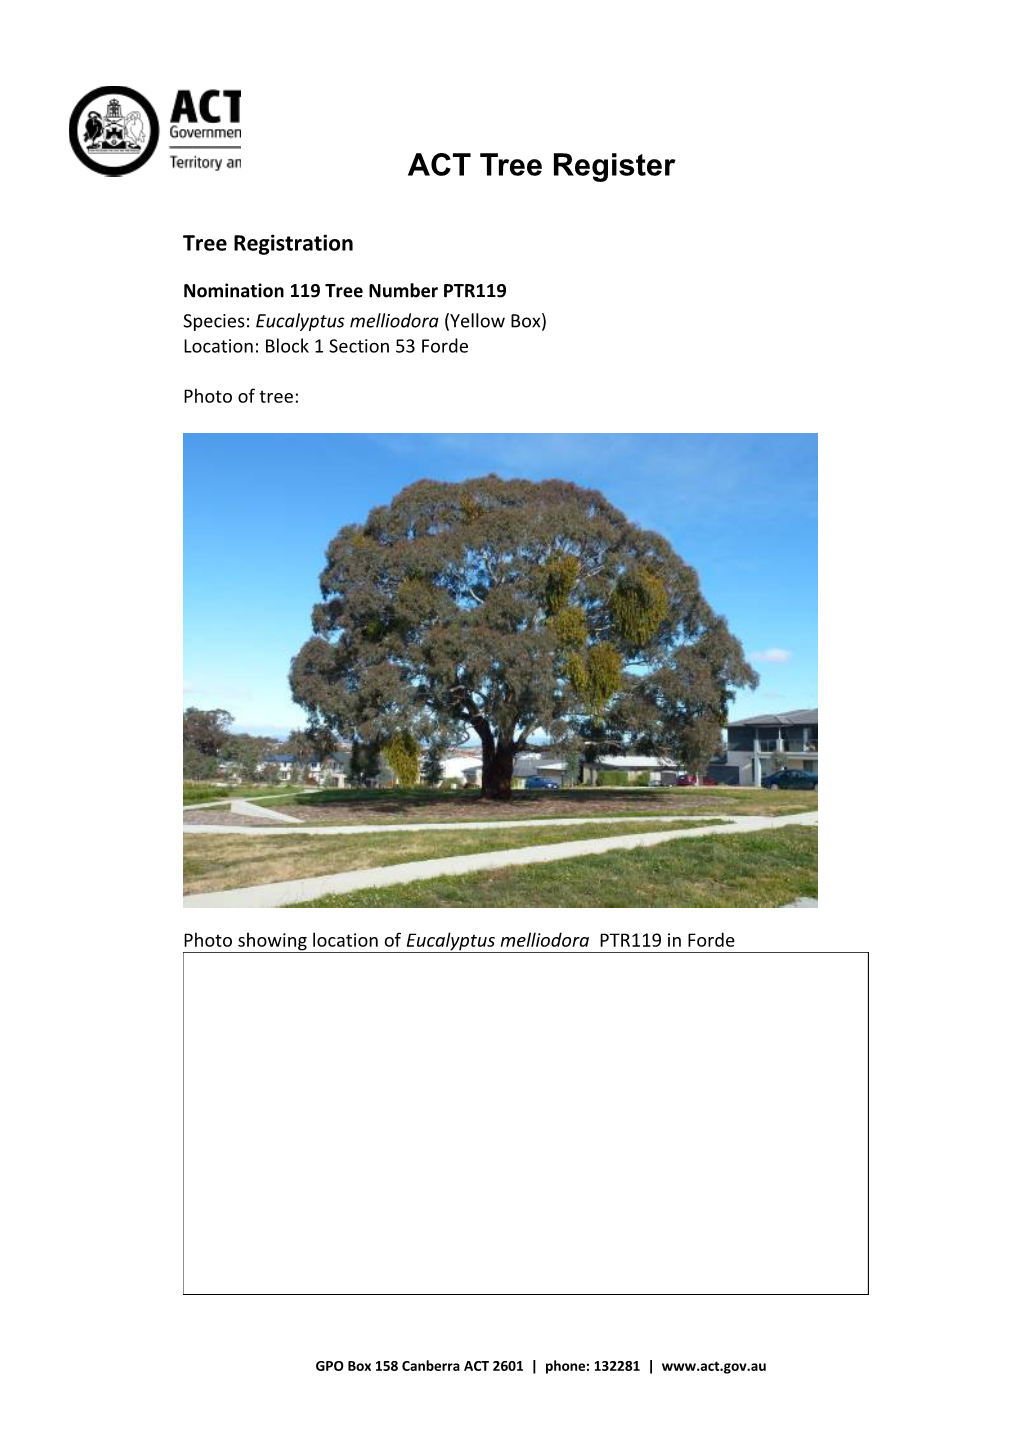 ACT Tree Register PTR 119